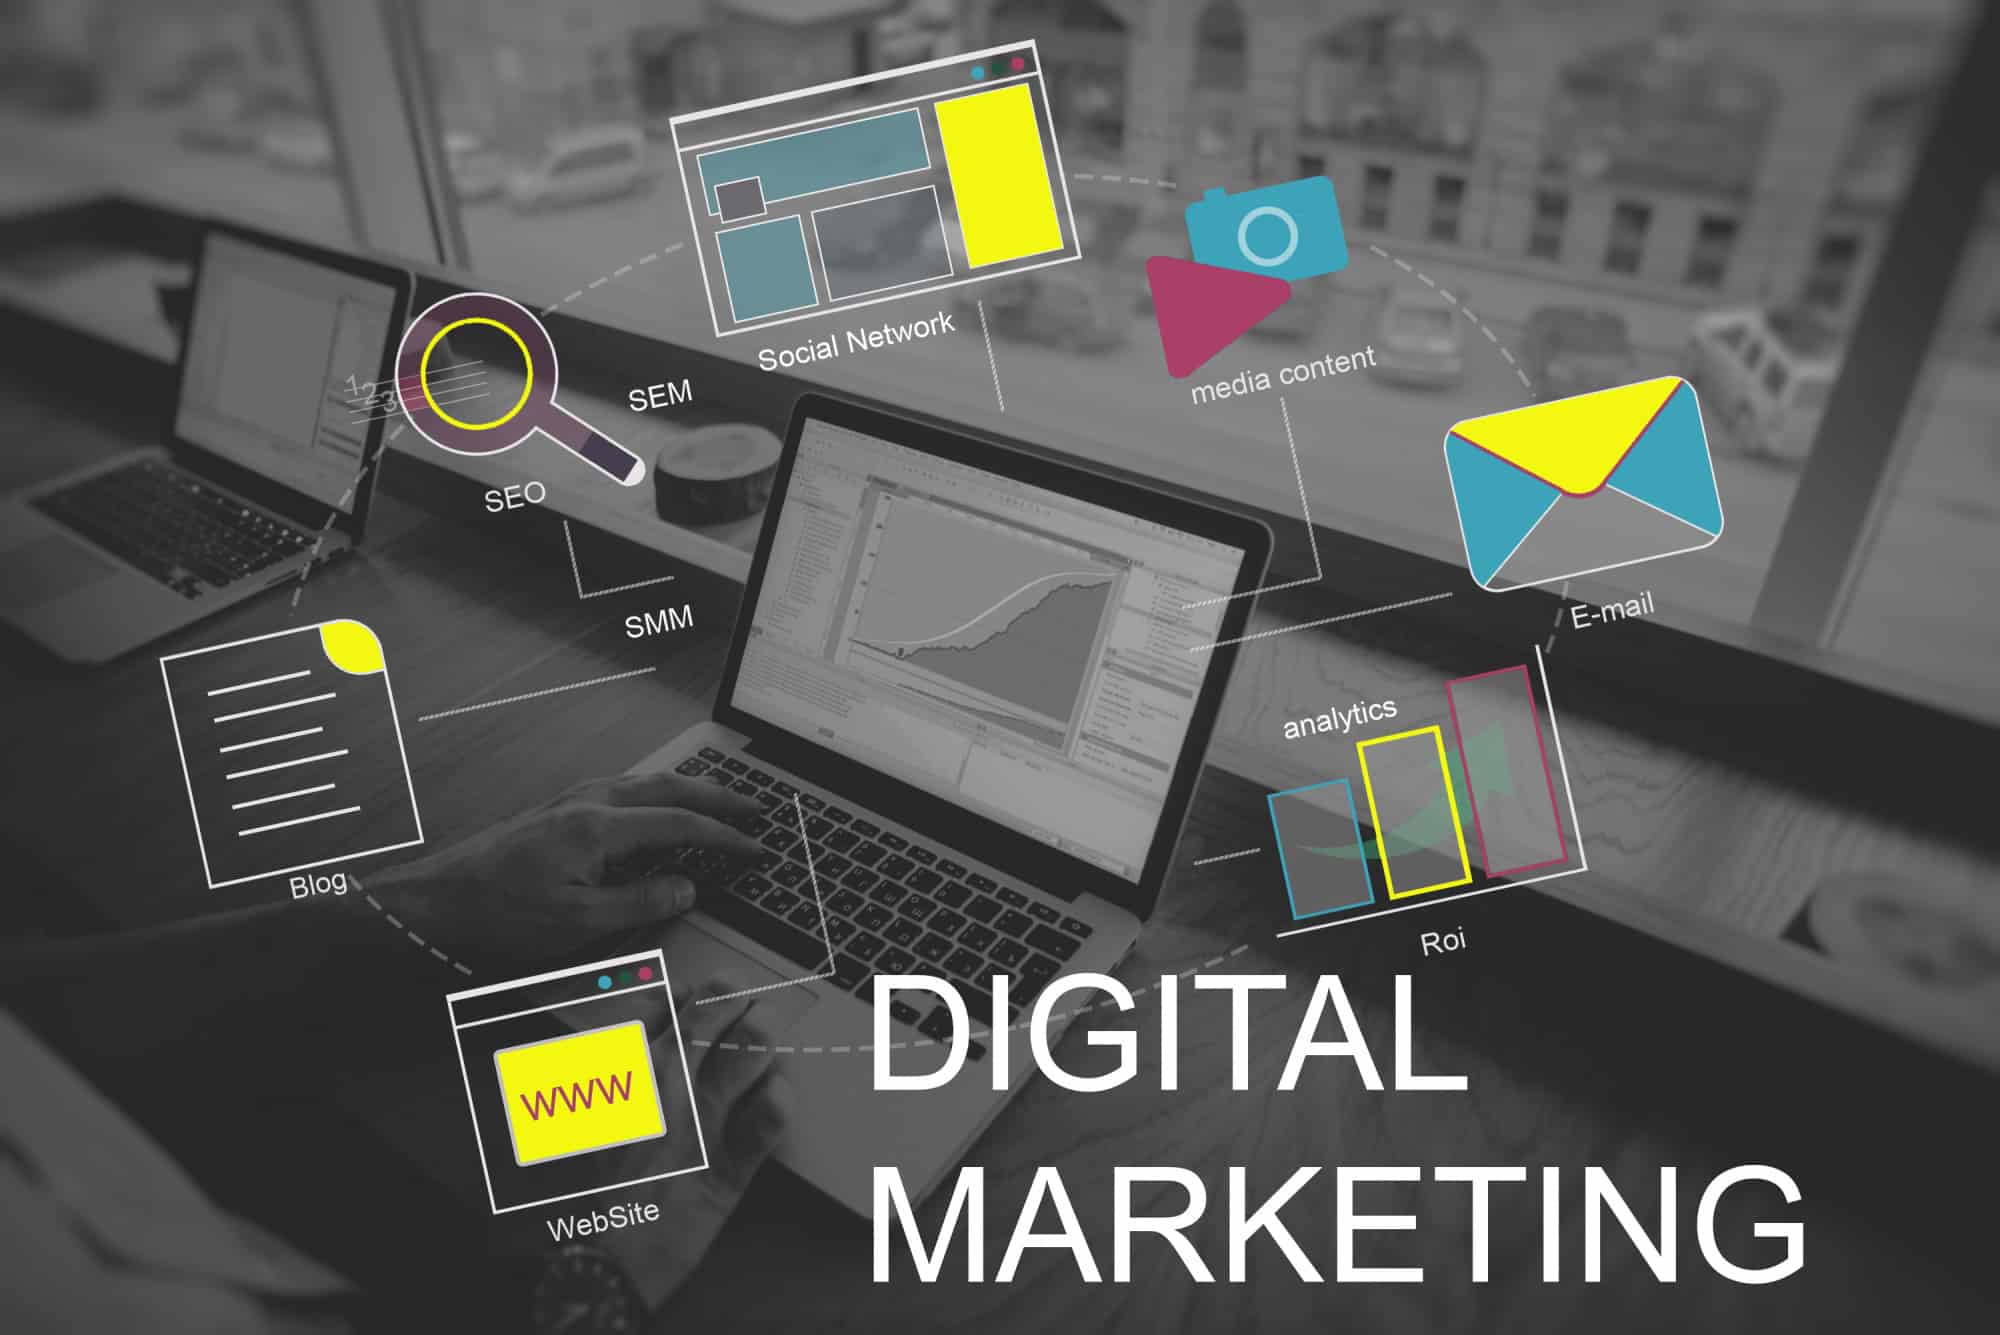 Digital marketing the development of the business through the Internet